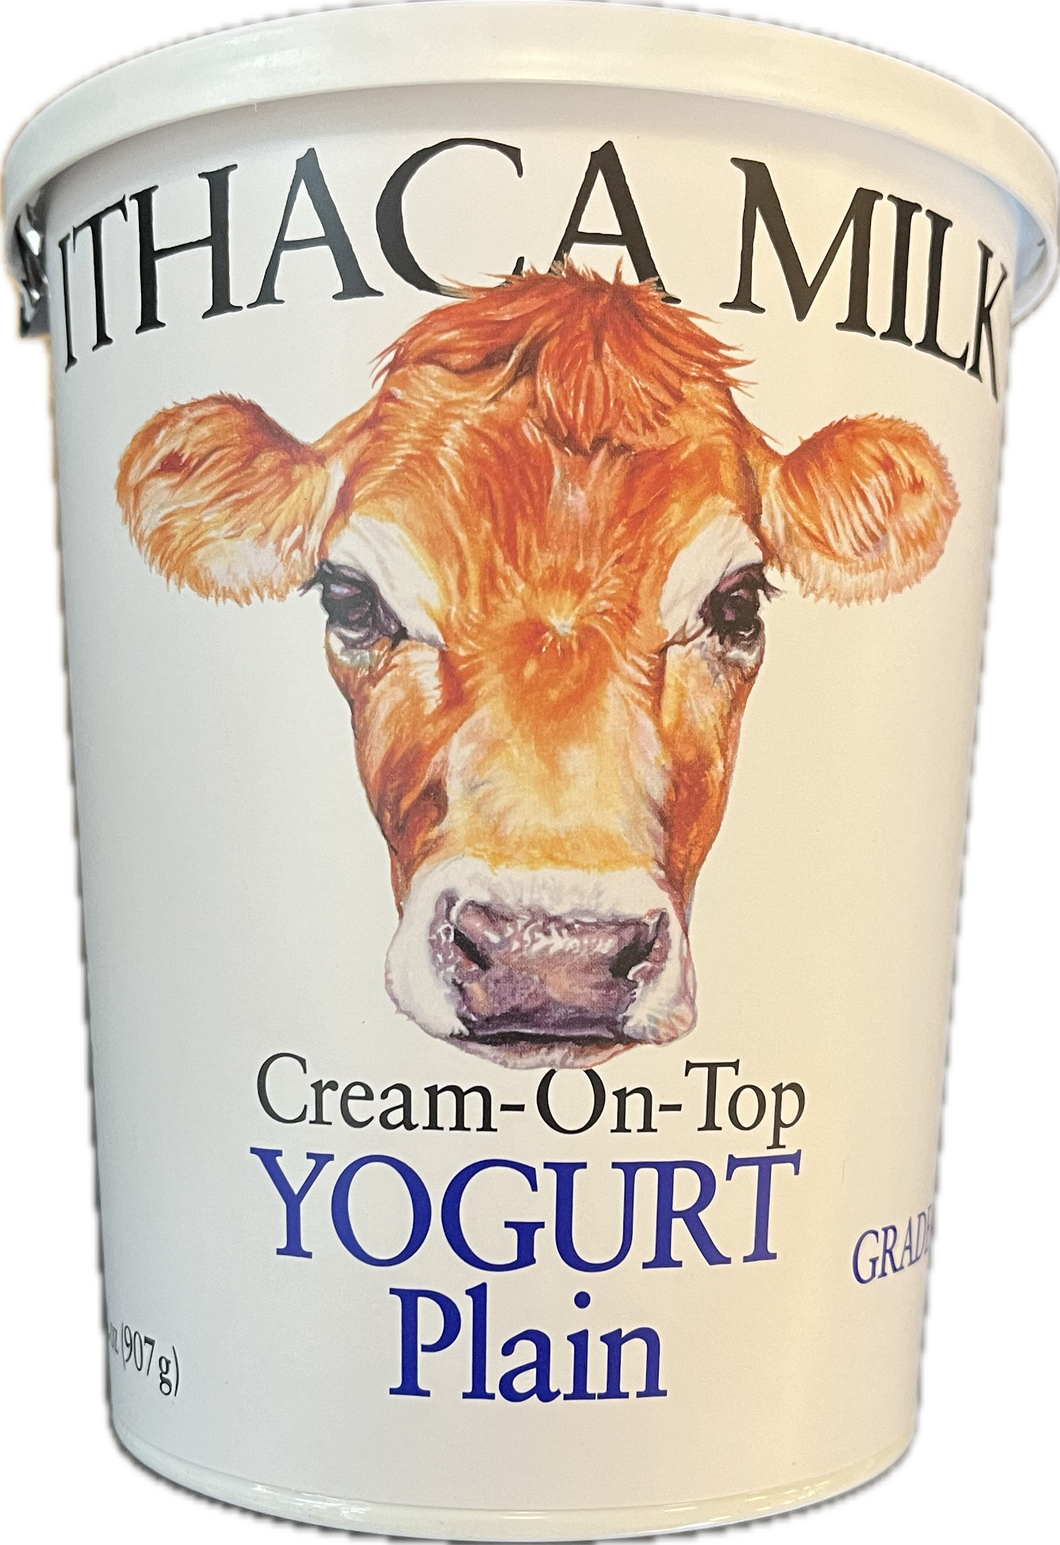 Ithaca Whole Jersey Cow Creamline Yogurt, Plain